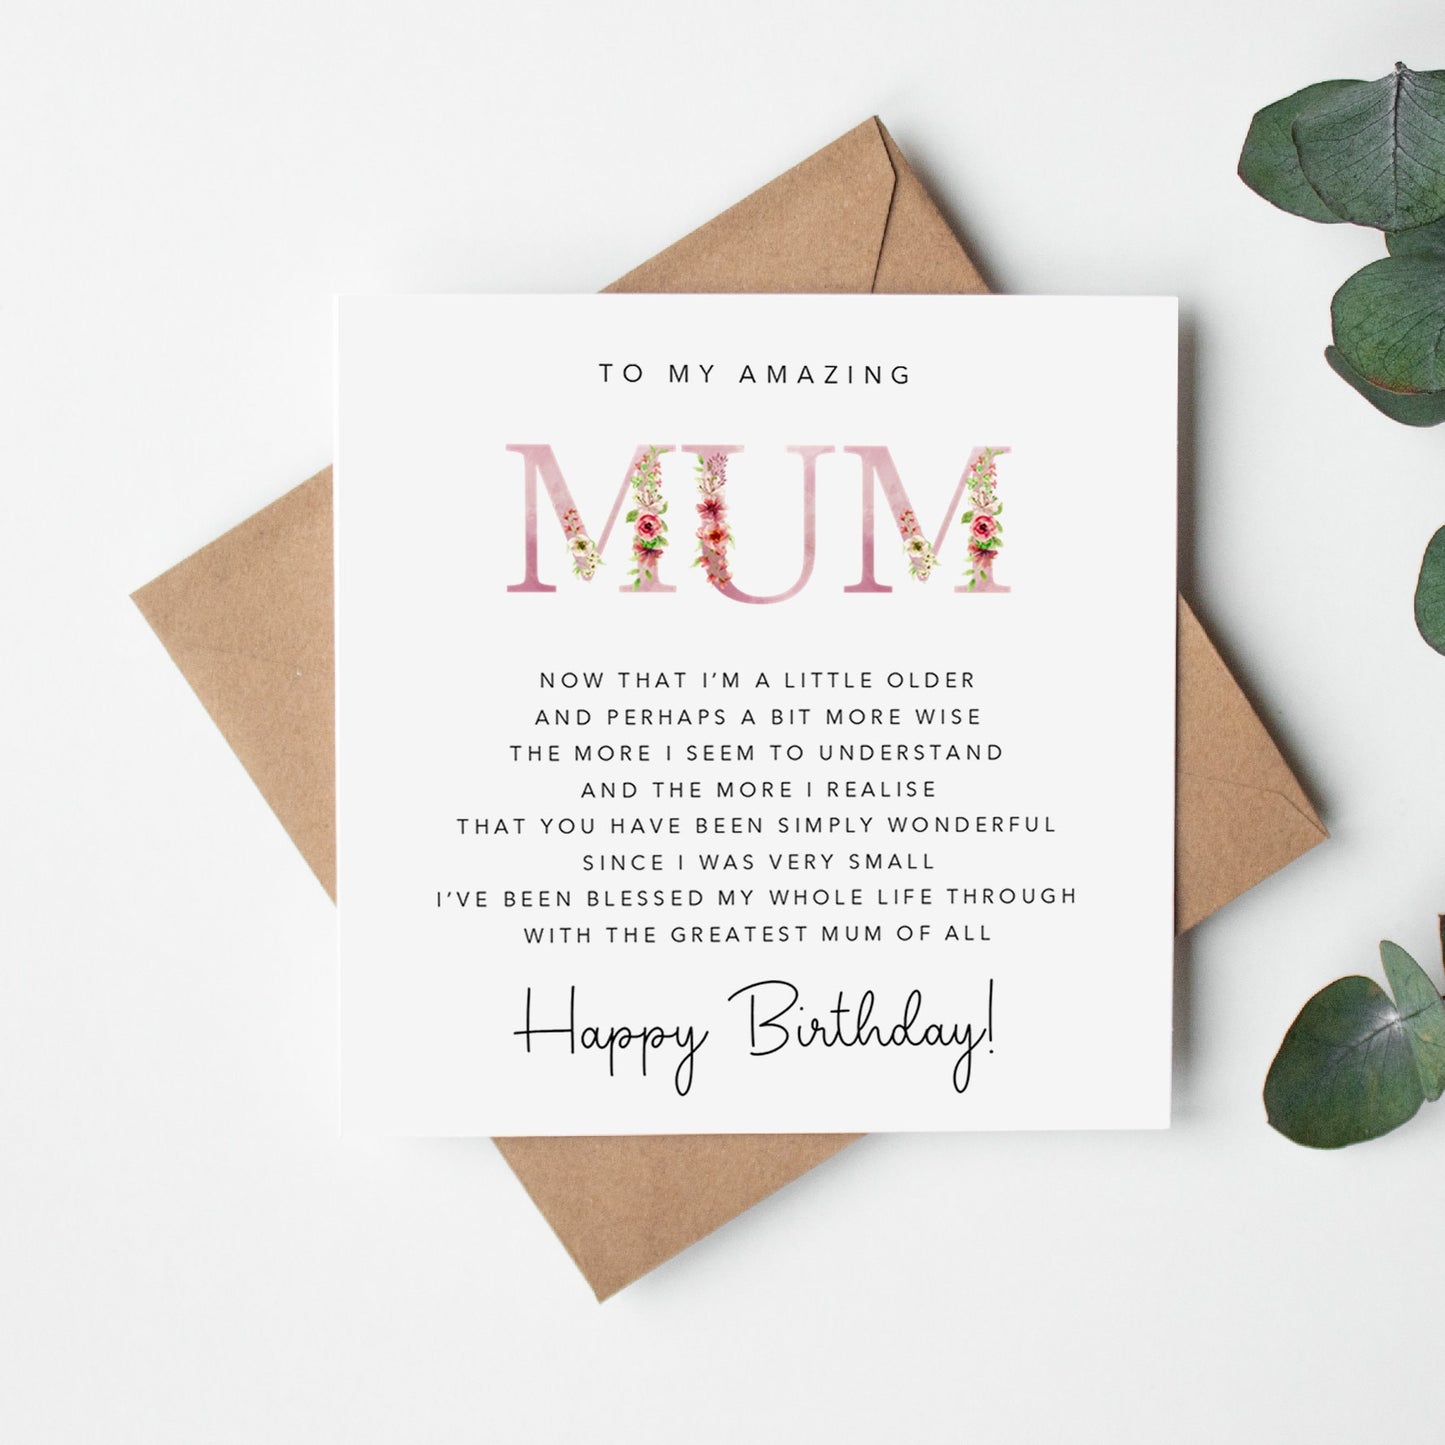 Mum Birthday Card with verse/poem